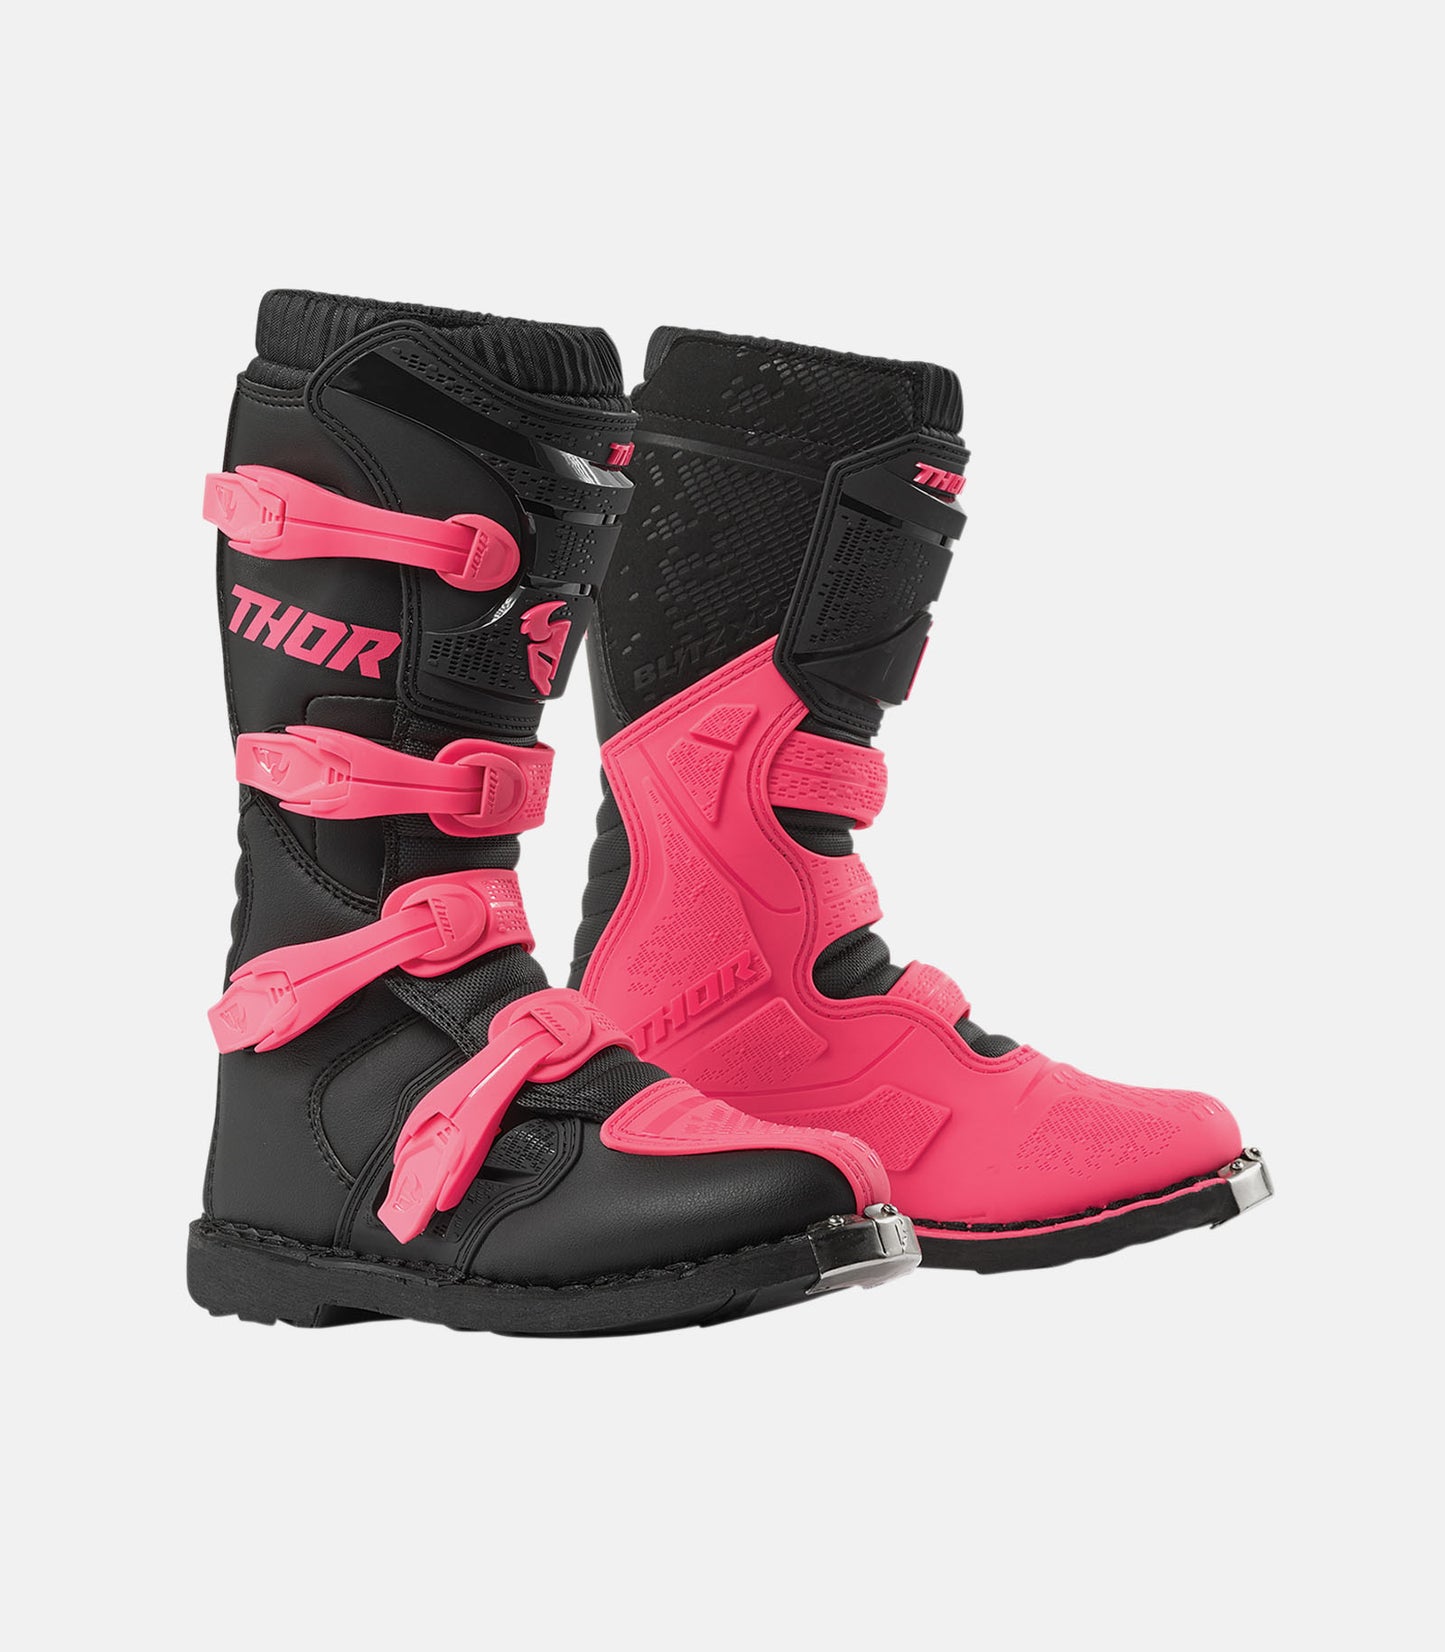 THOR Women's Blitz XP Boots - Black/Pink